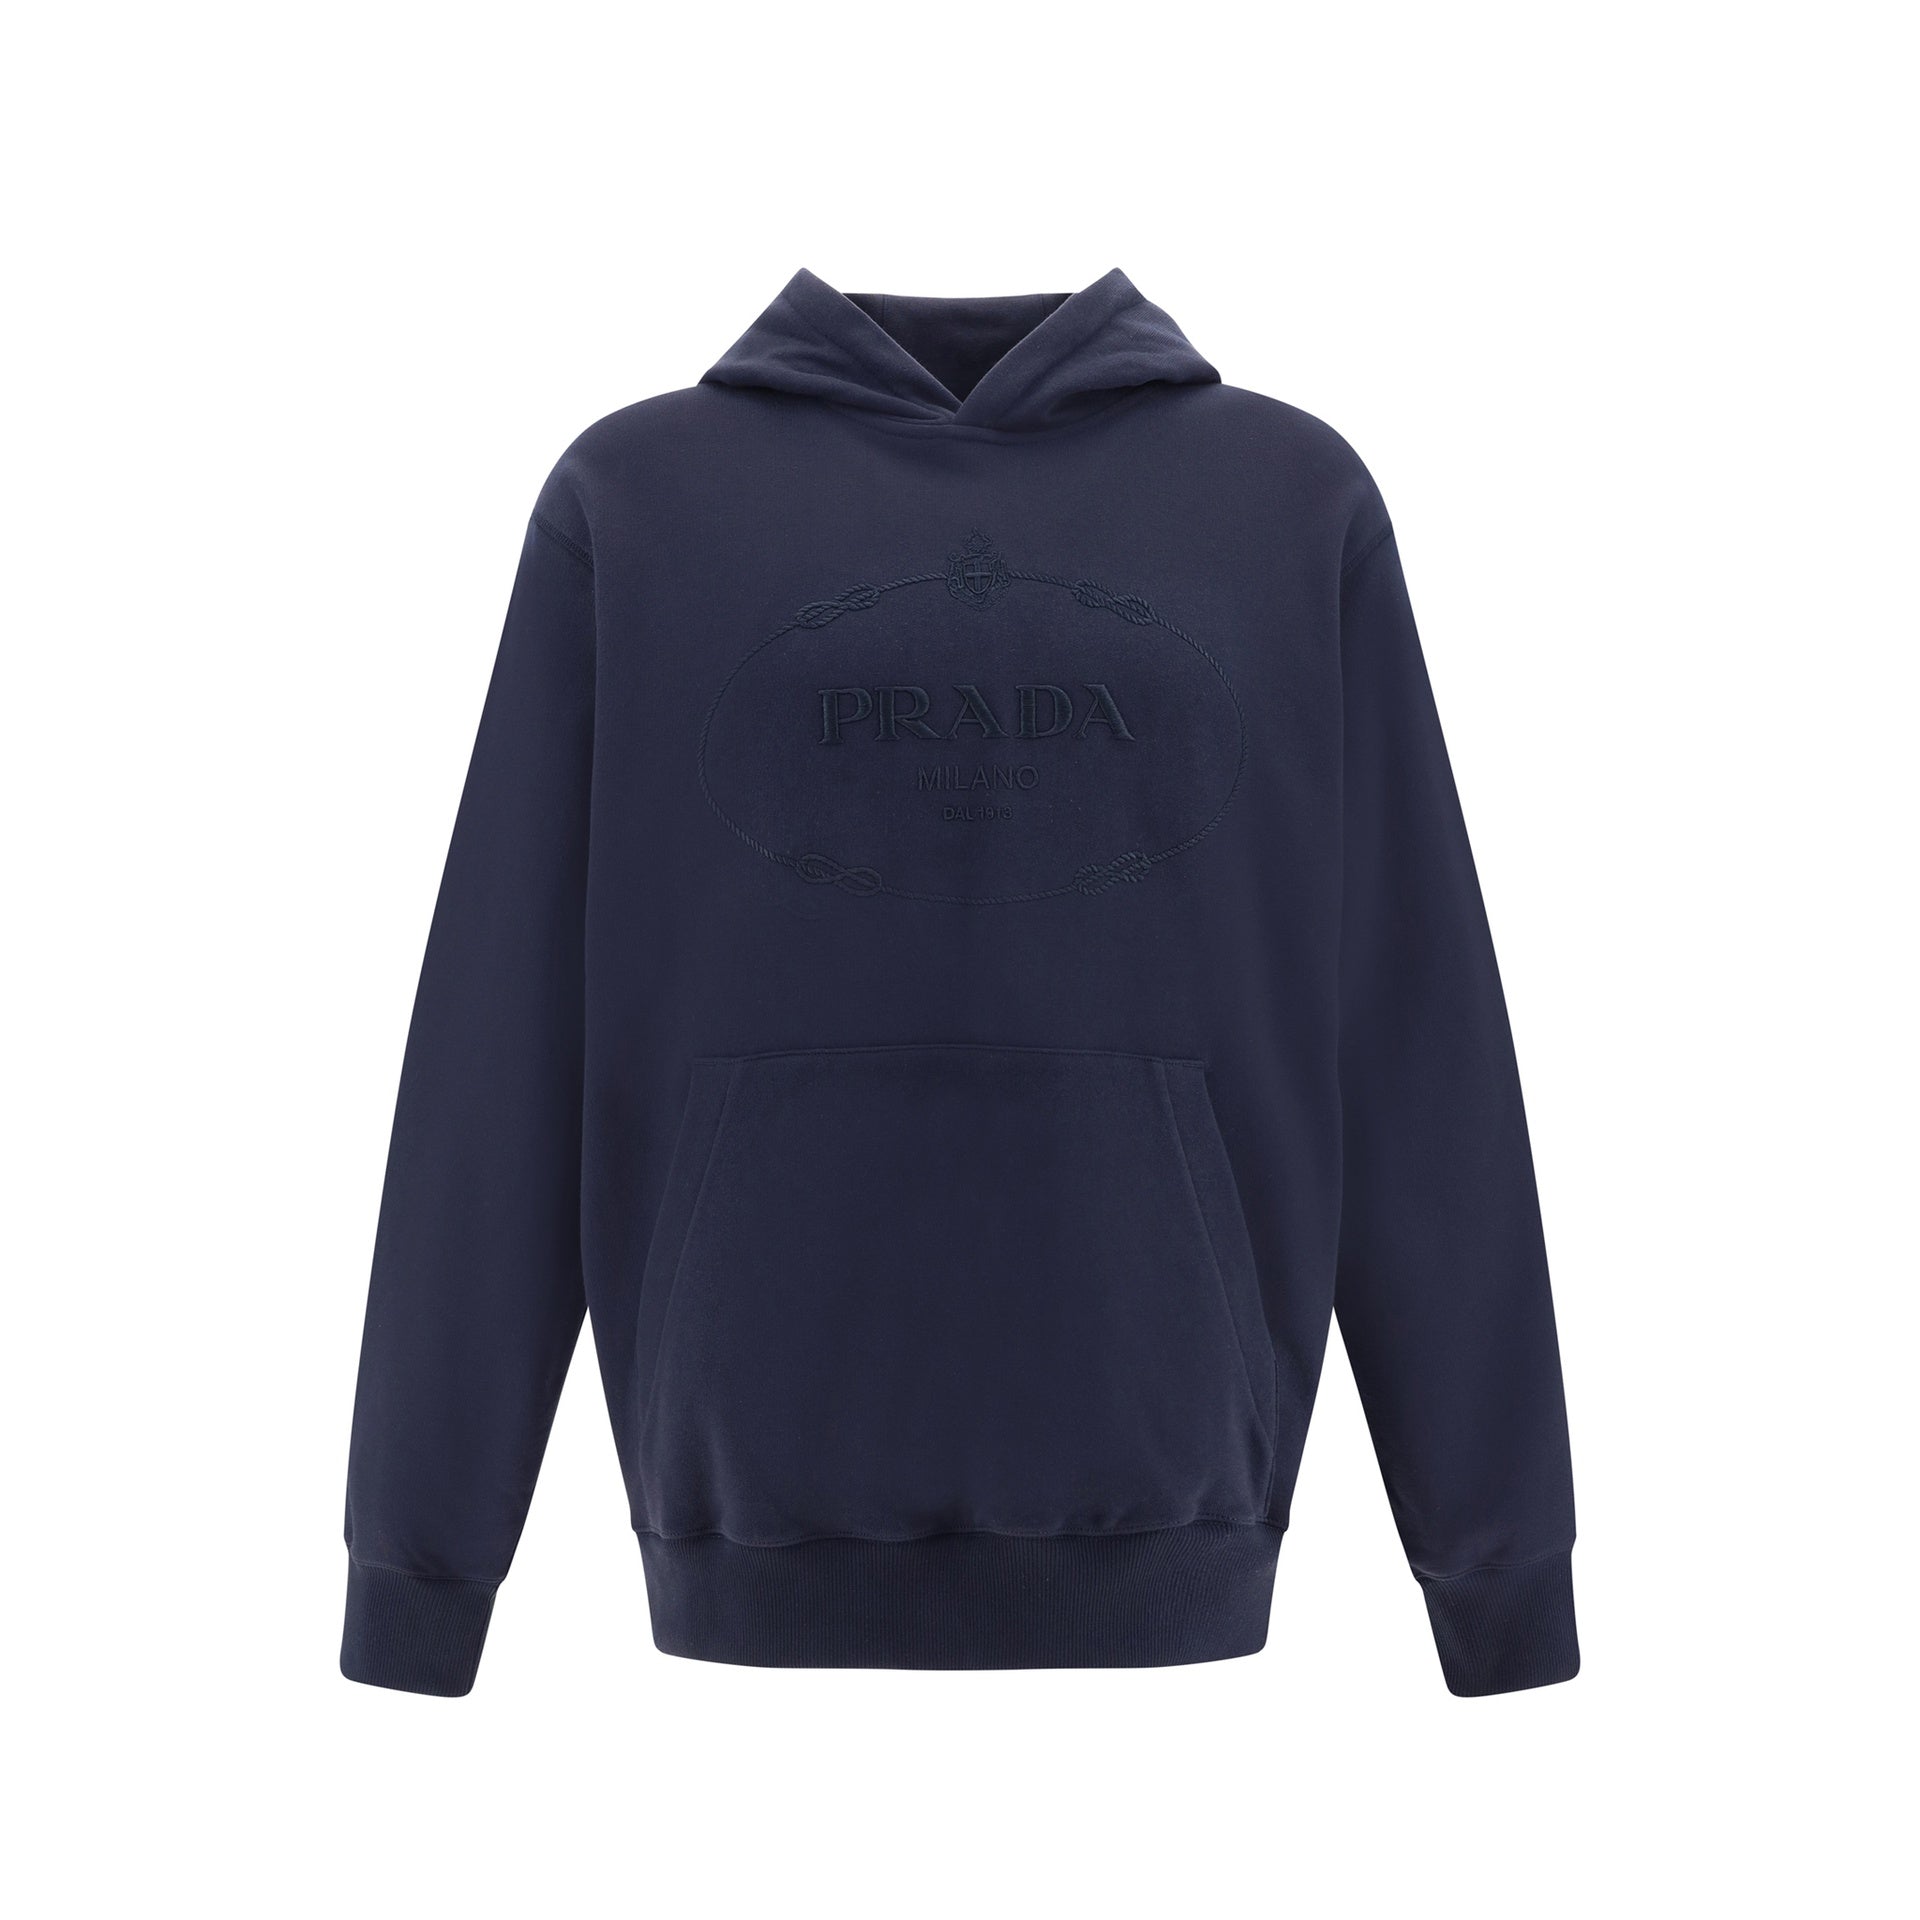 PRADA-Outlet-Sale-Prada Hooded Sweatshirt-MEN CLOTHING-BLACK-L-ARCHIVIST